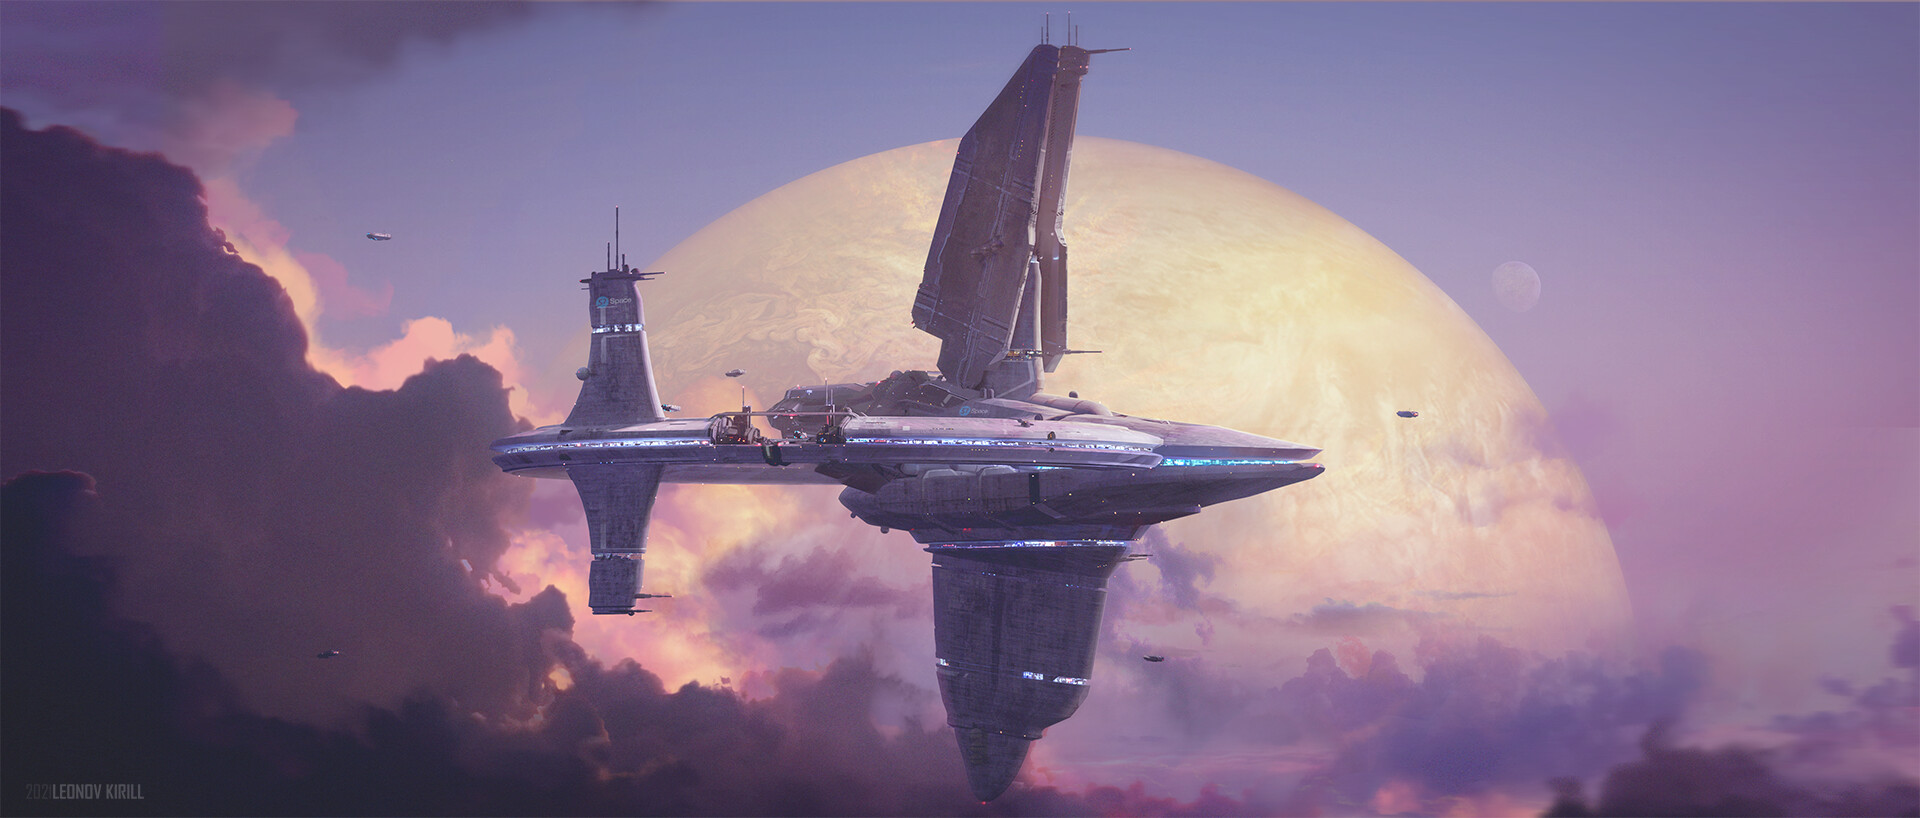 General 1920x818 artwork digital art futuristic ship clouds planet sky spaceship science fiction Kirill Leonov